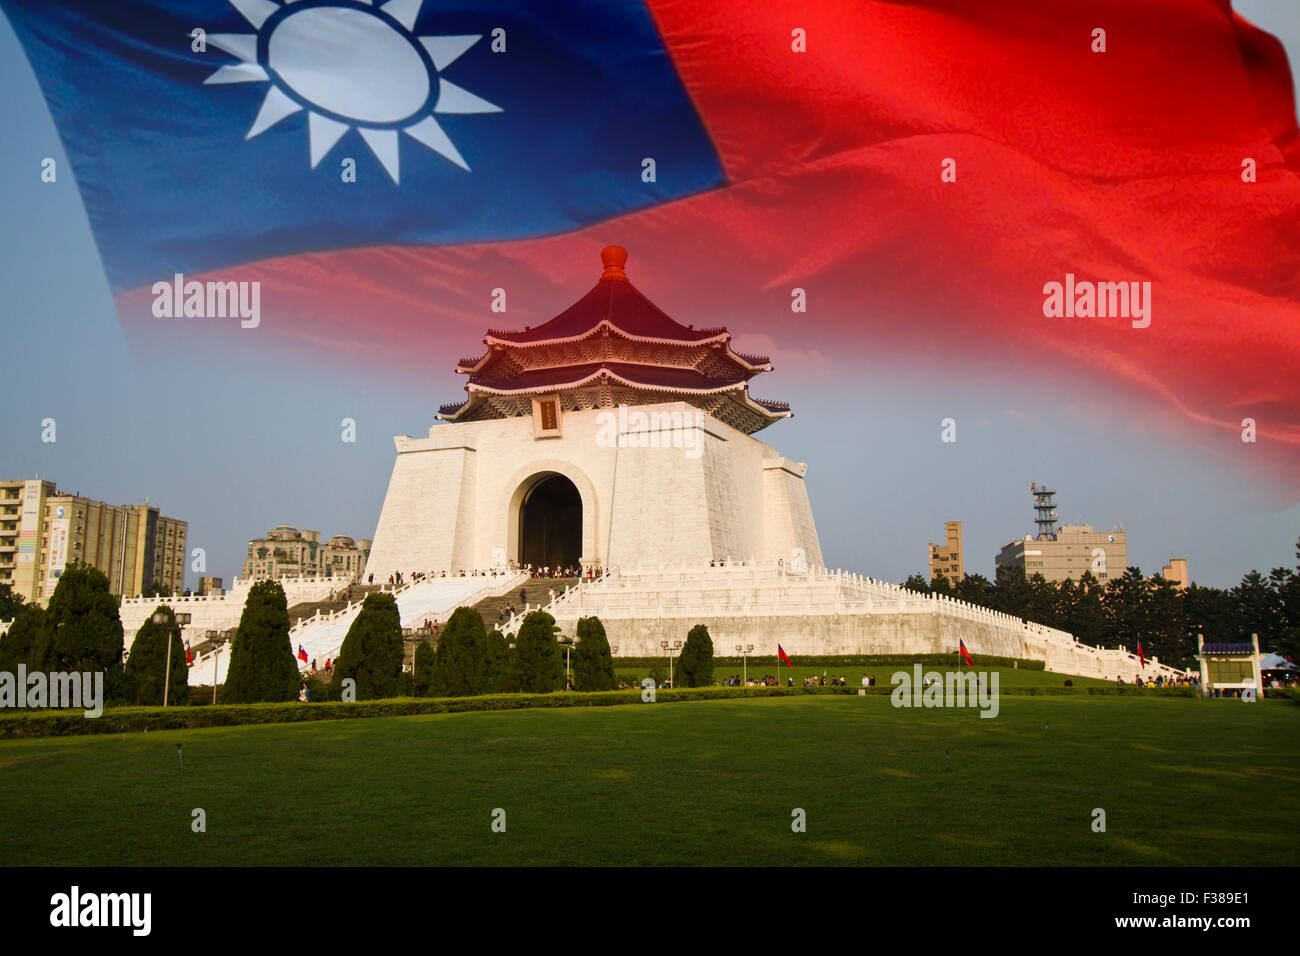 chiang kai shek memorial hall with the flag of Republic of China(Taiwan) Stock Photo